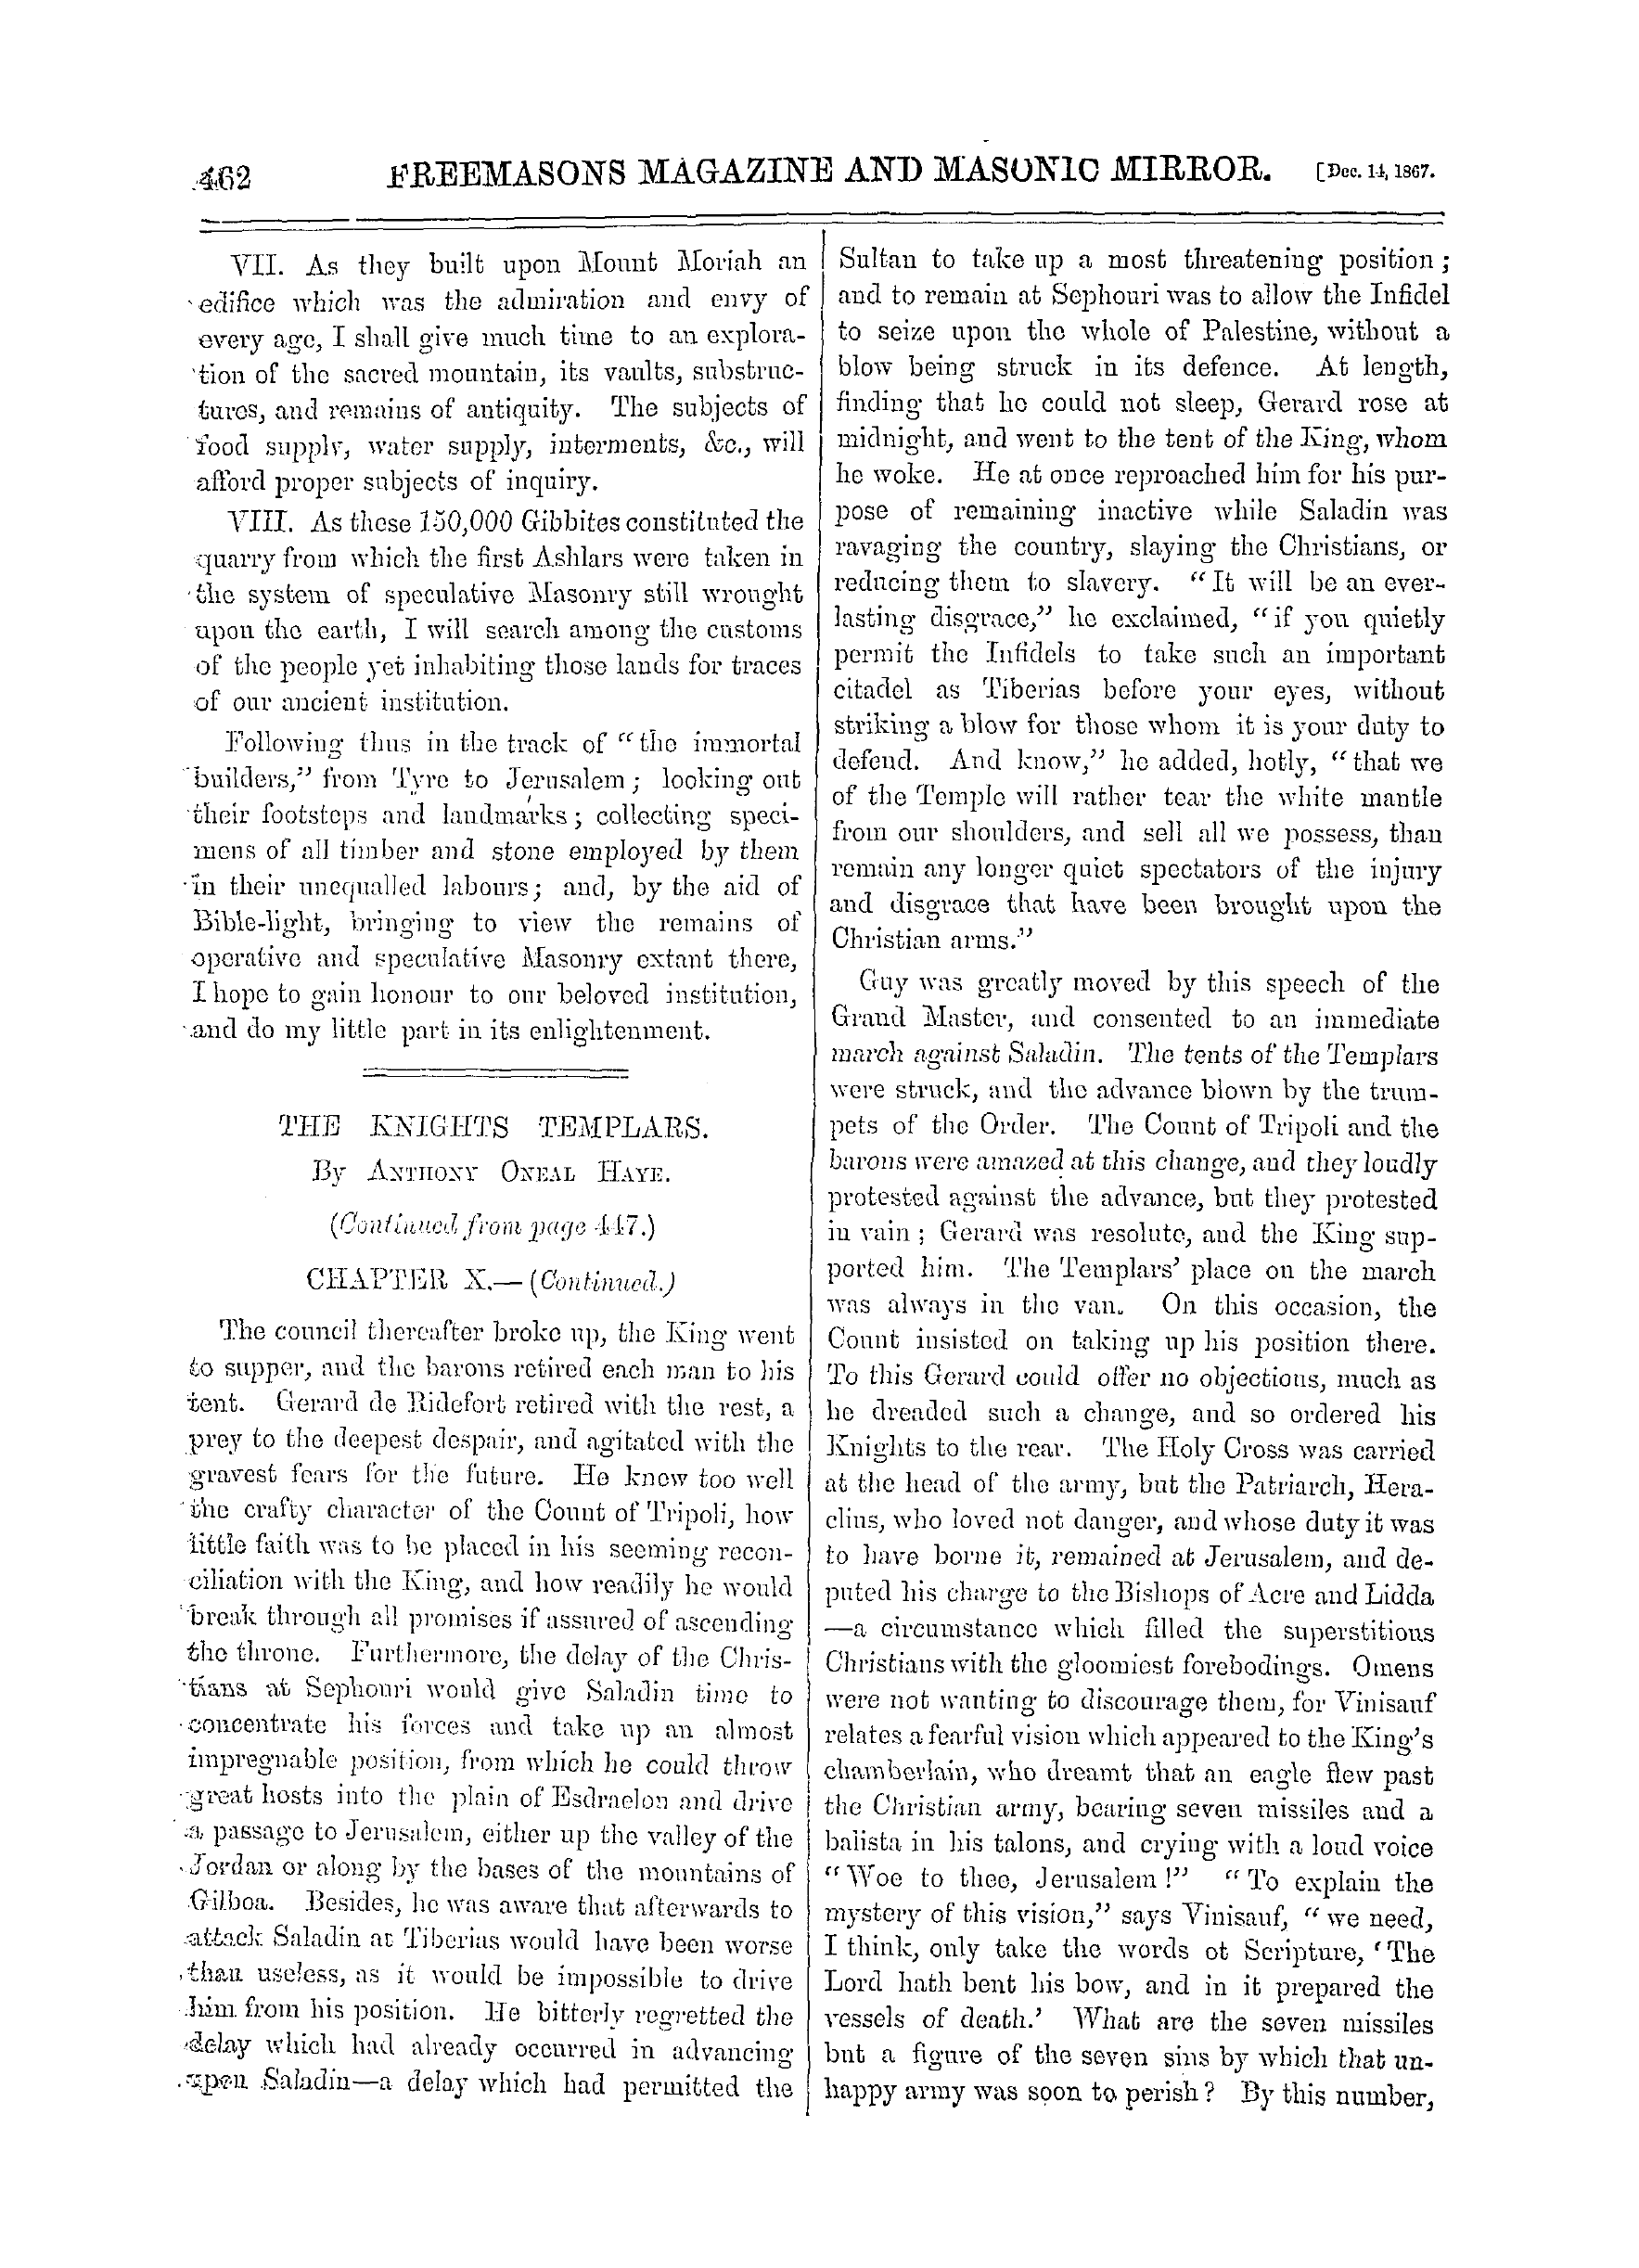 The Freemasons' Monthly Magazine: 1867-12-14 - Masonic Pilgrimage To The Orient.